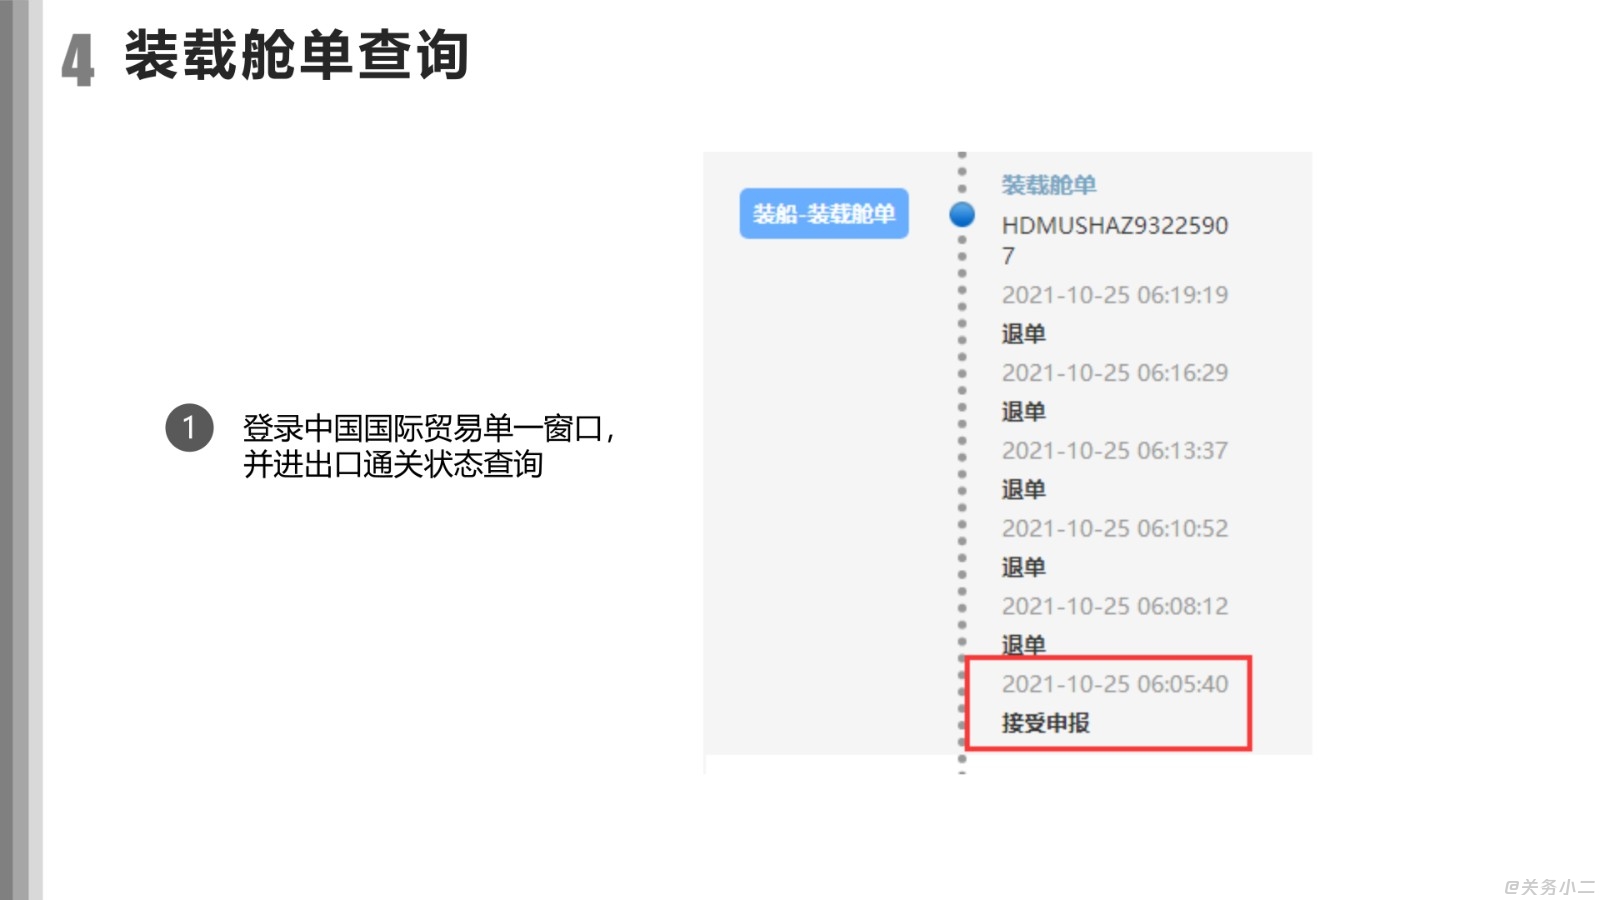 PPT-上海海关海运出口放行信息切换安排宣贯会_8.jpg